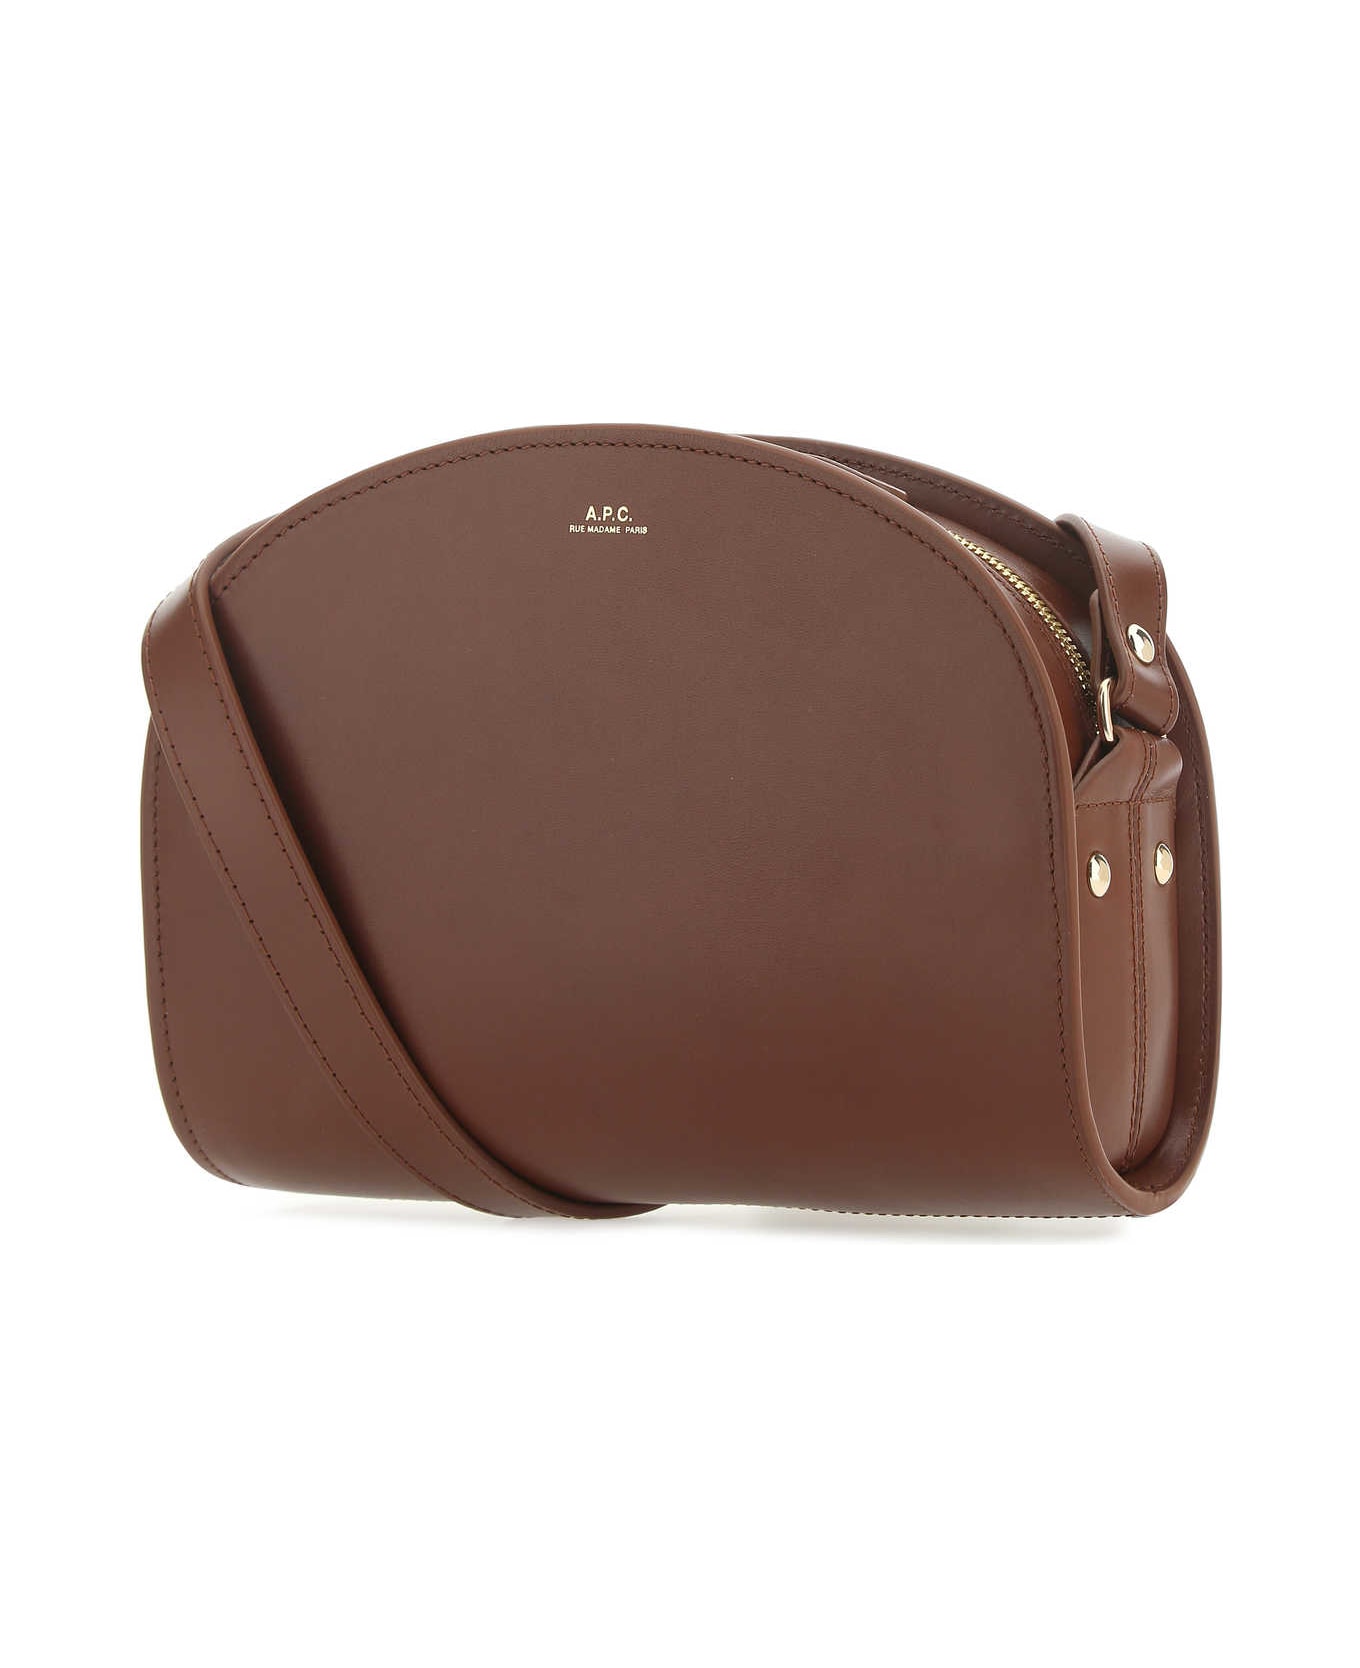 A.P.C. Brown Leather Demi Lune Shoulder Bag - CAD